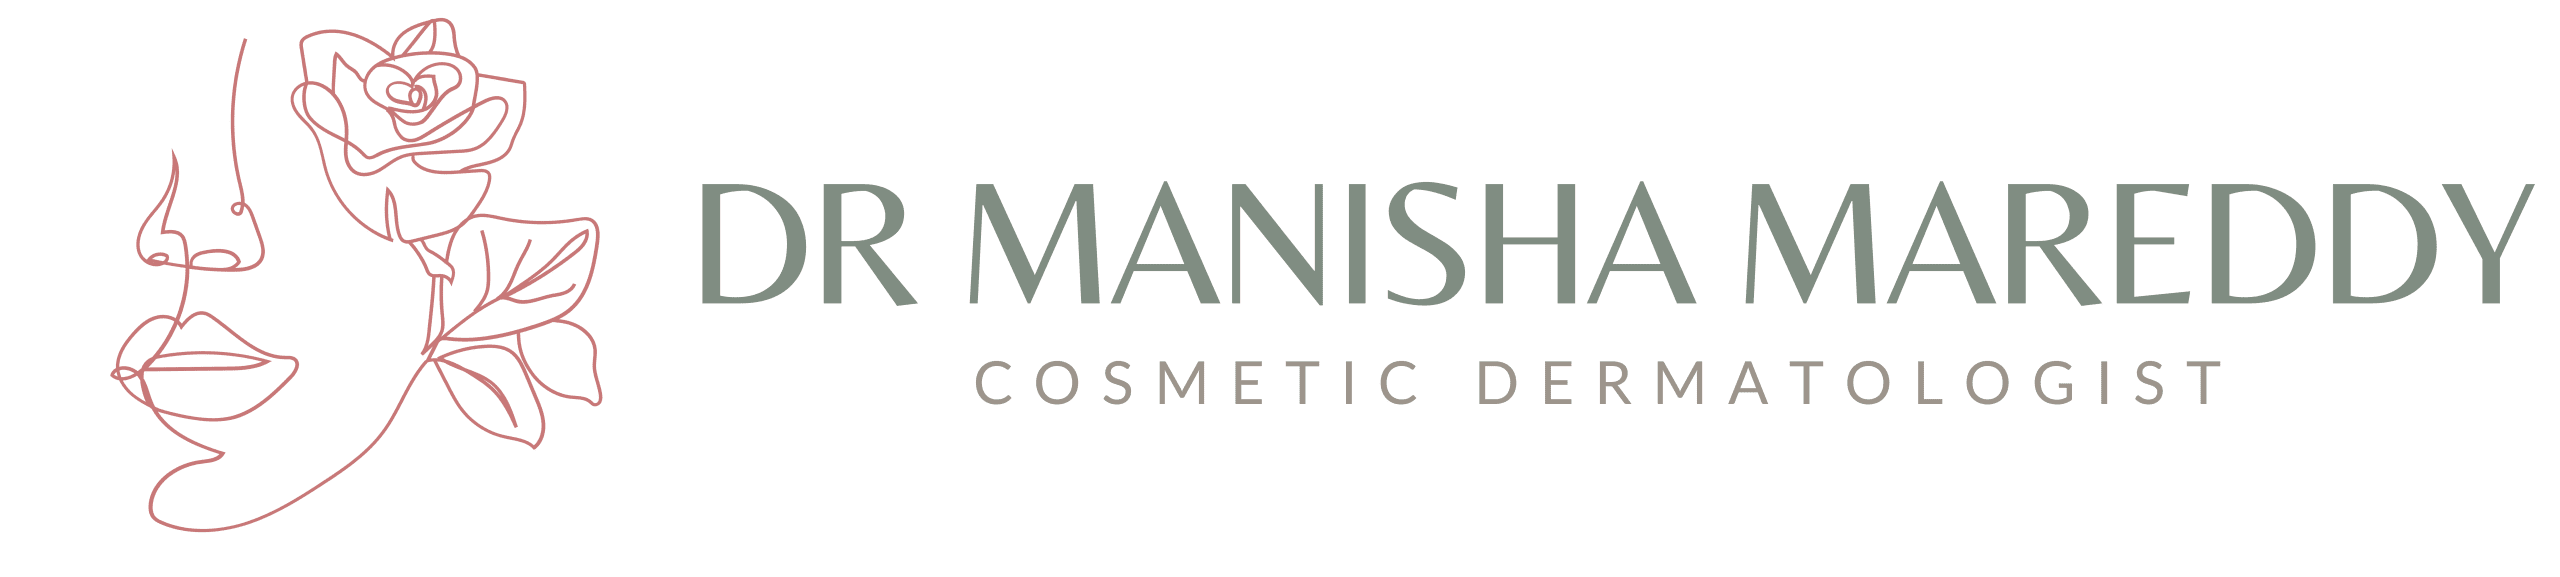 Dr Manisha Mareddy Cosmetic Dermatologist Best Dermatologist in hyderabad